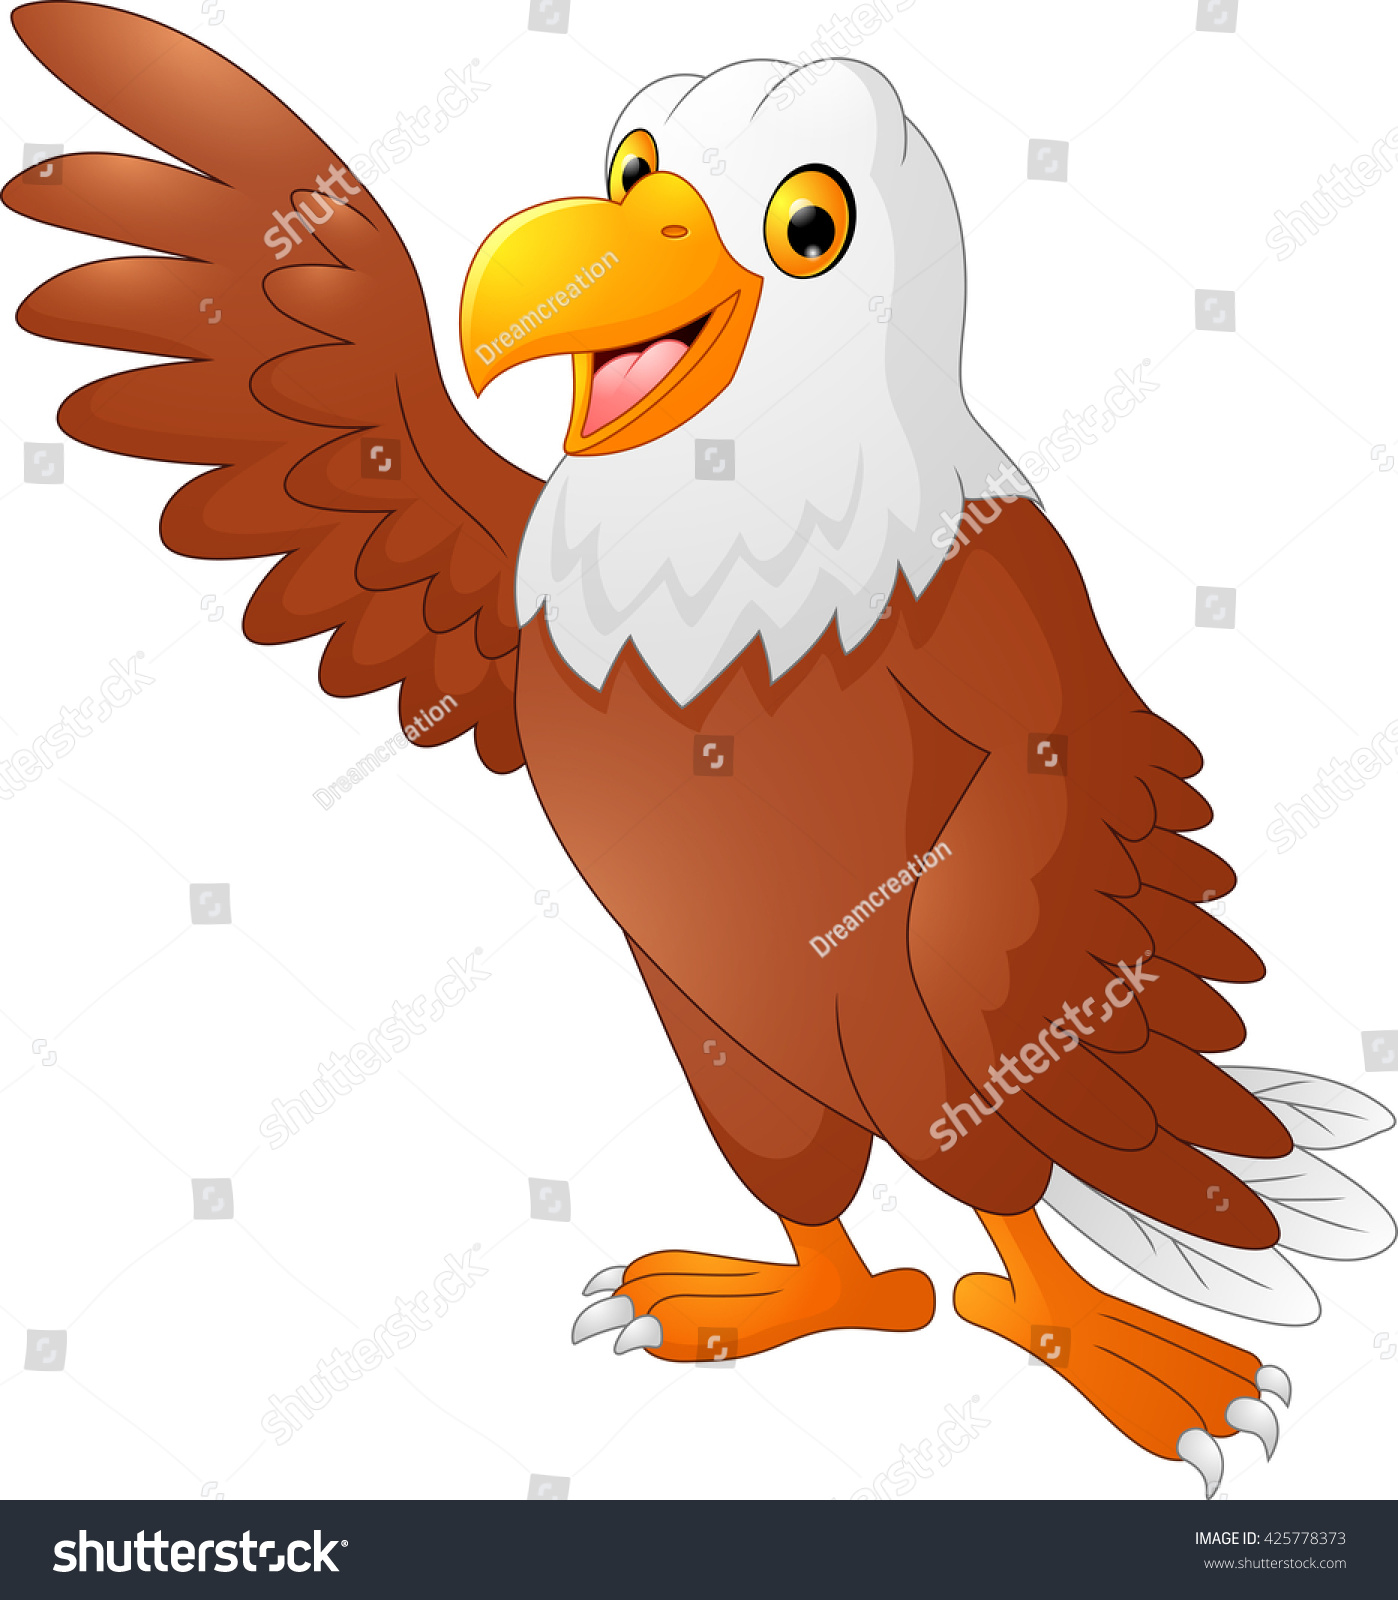 Eagle Cartoon Waving Stock Photo 425778373 : Shutterstock